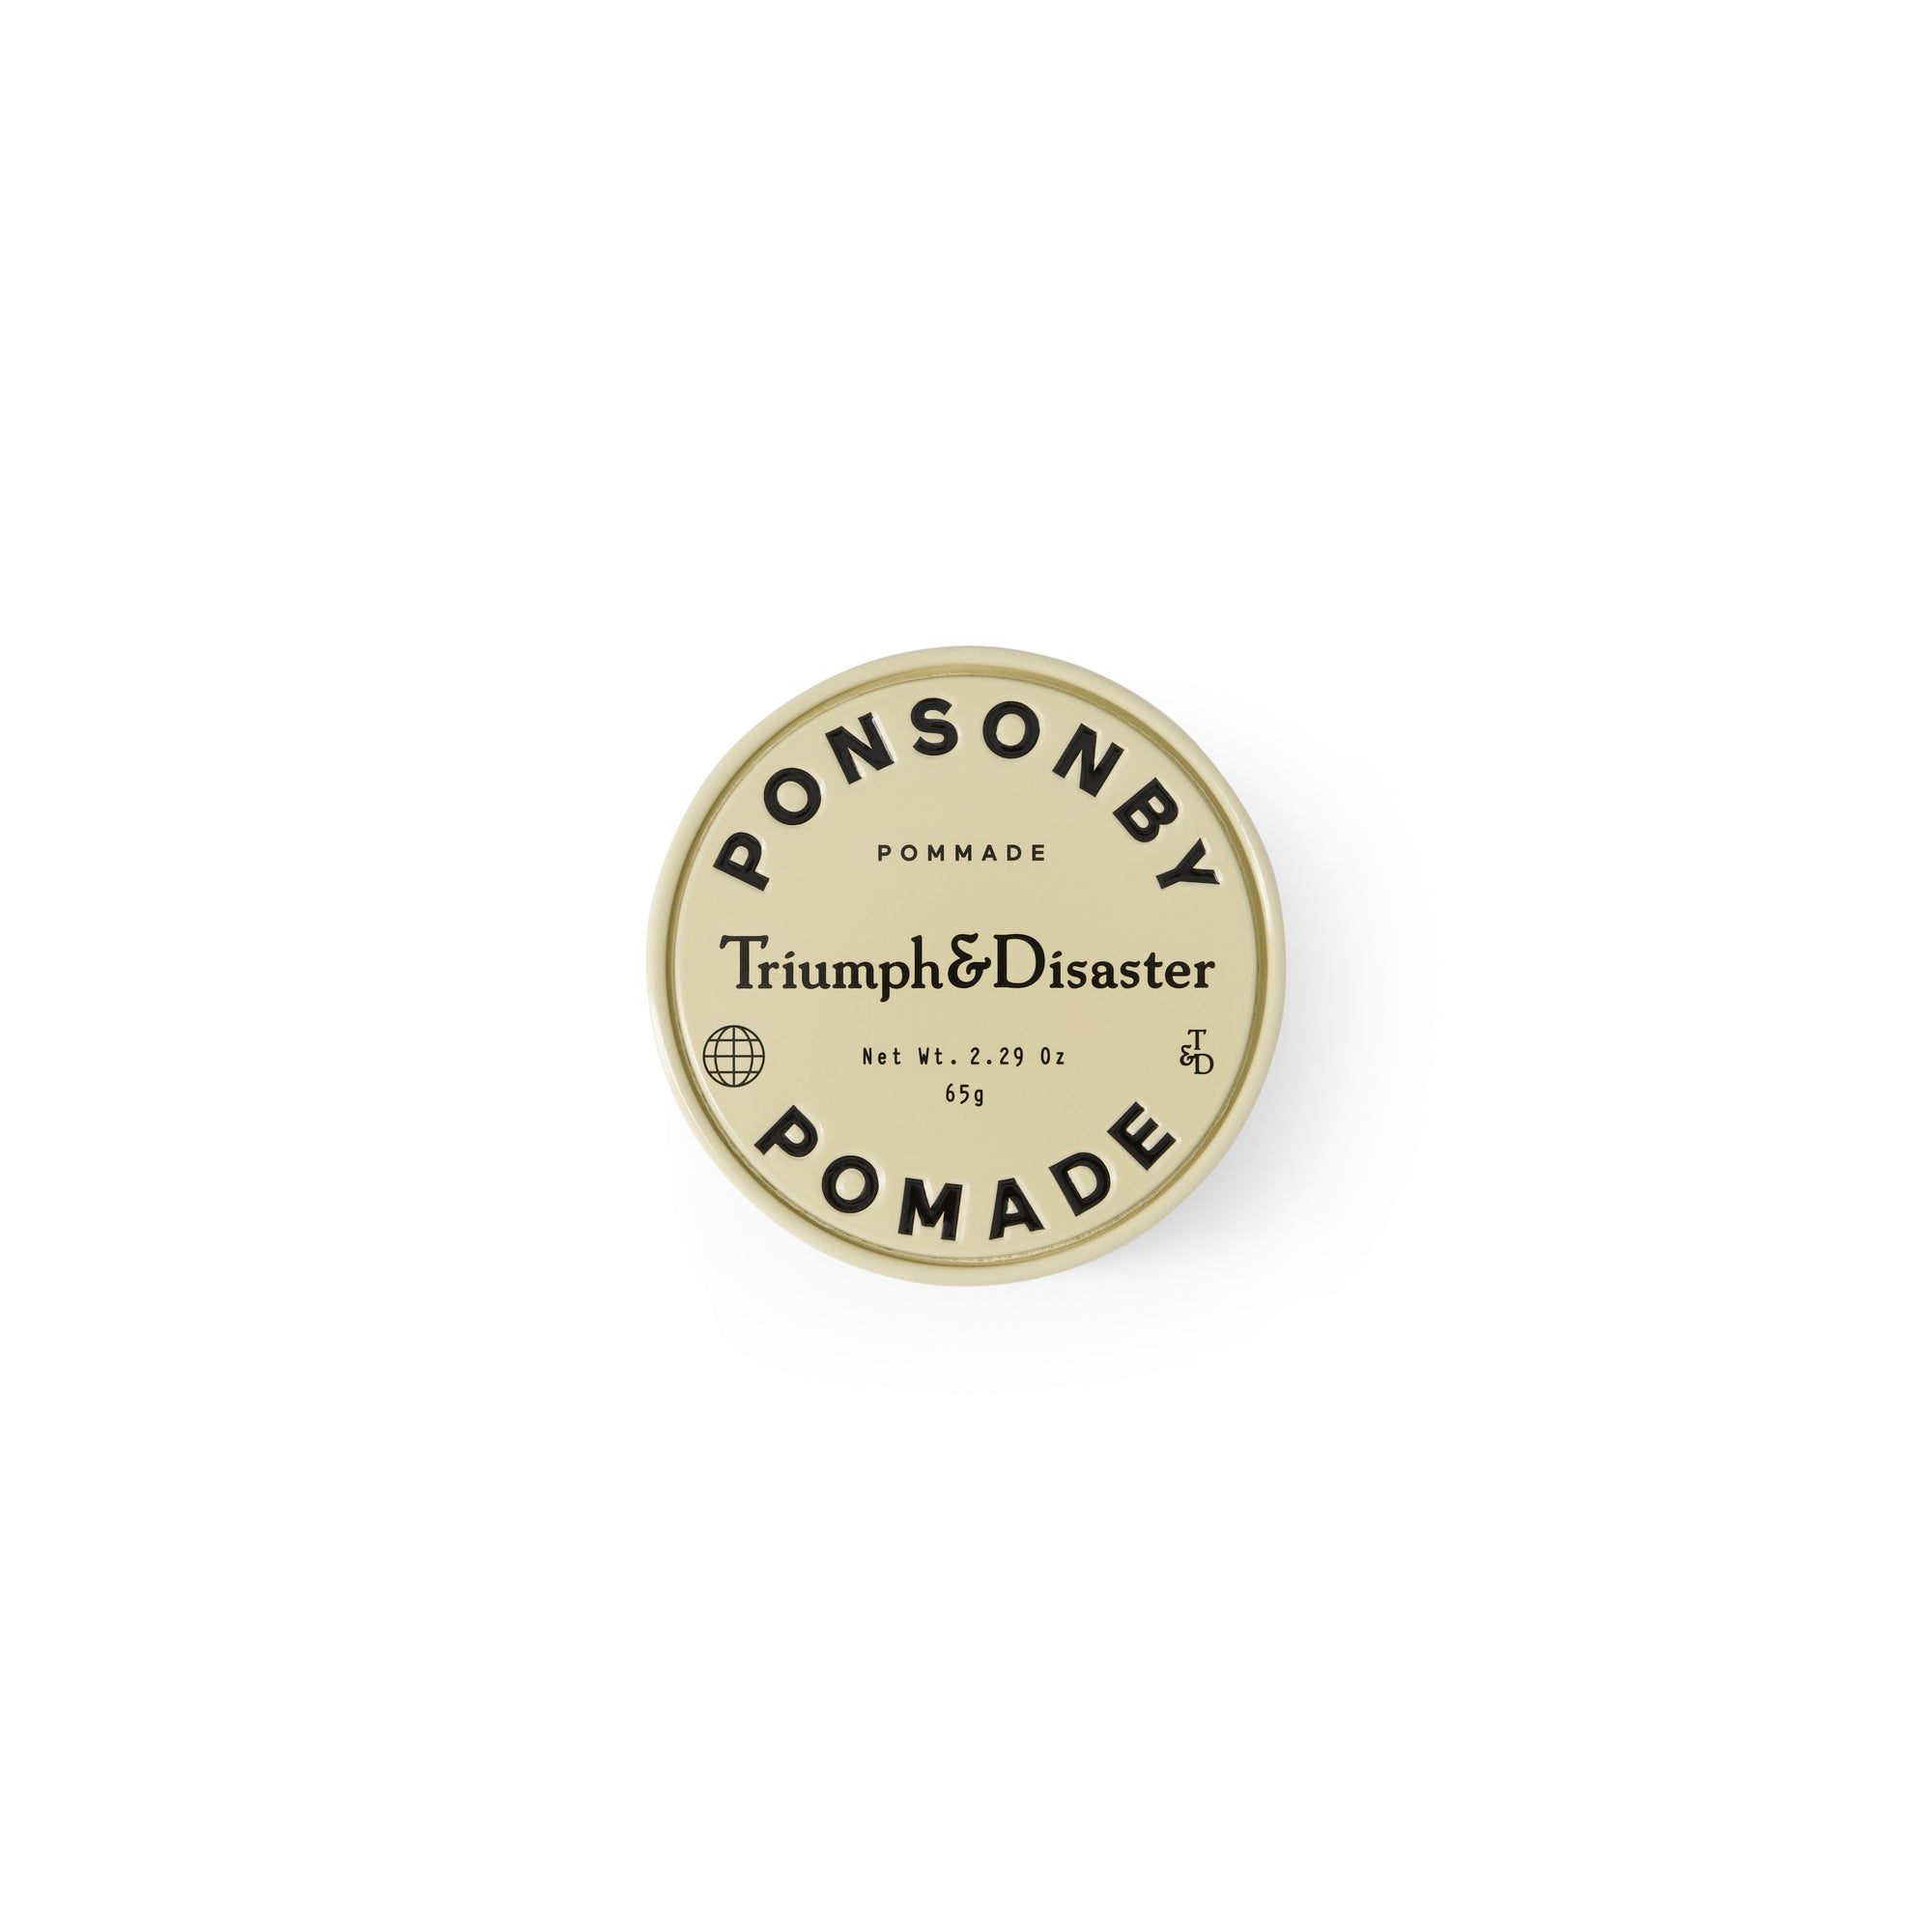 Triumph &amp; Disaster - Ponsonby Pomade 65g